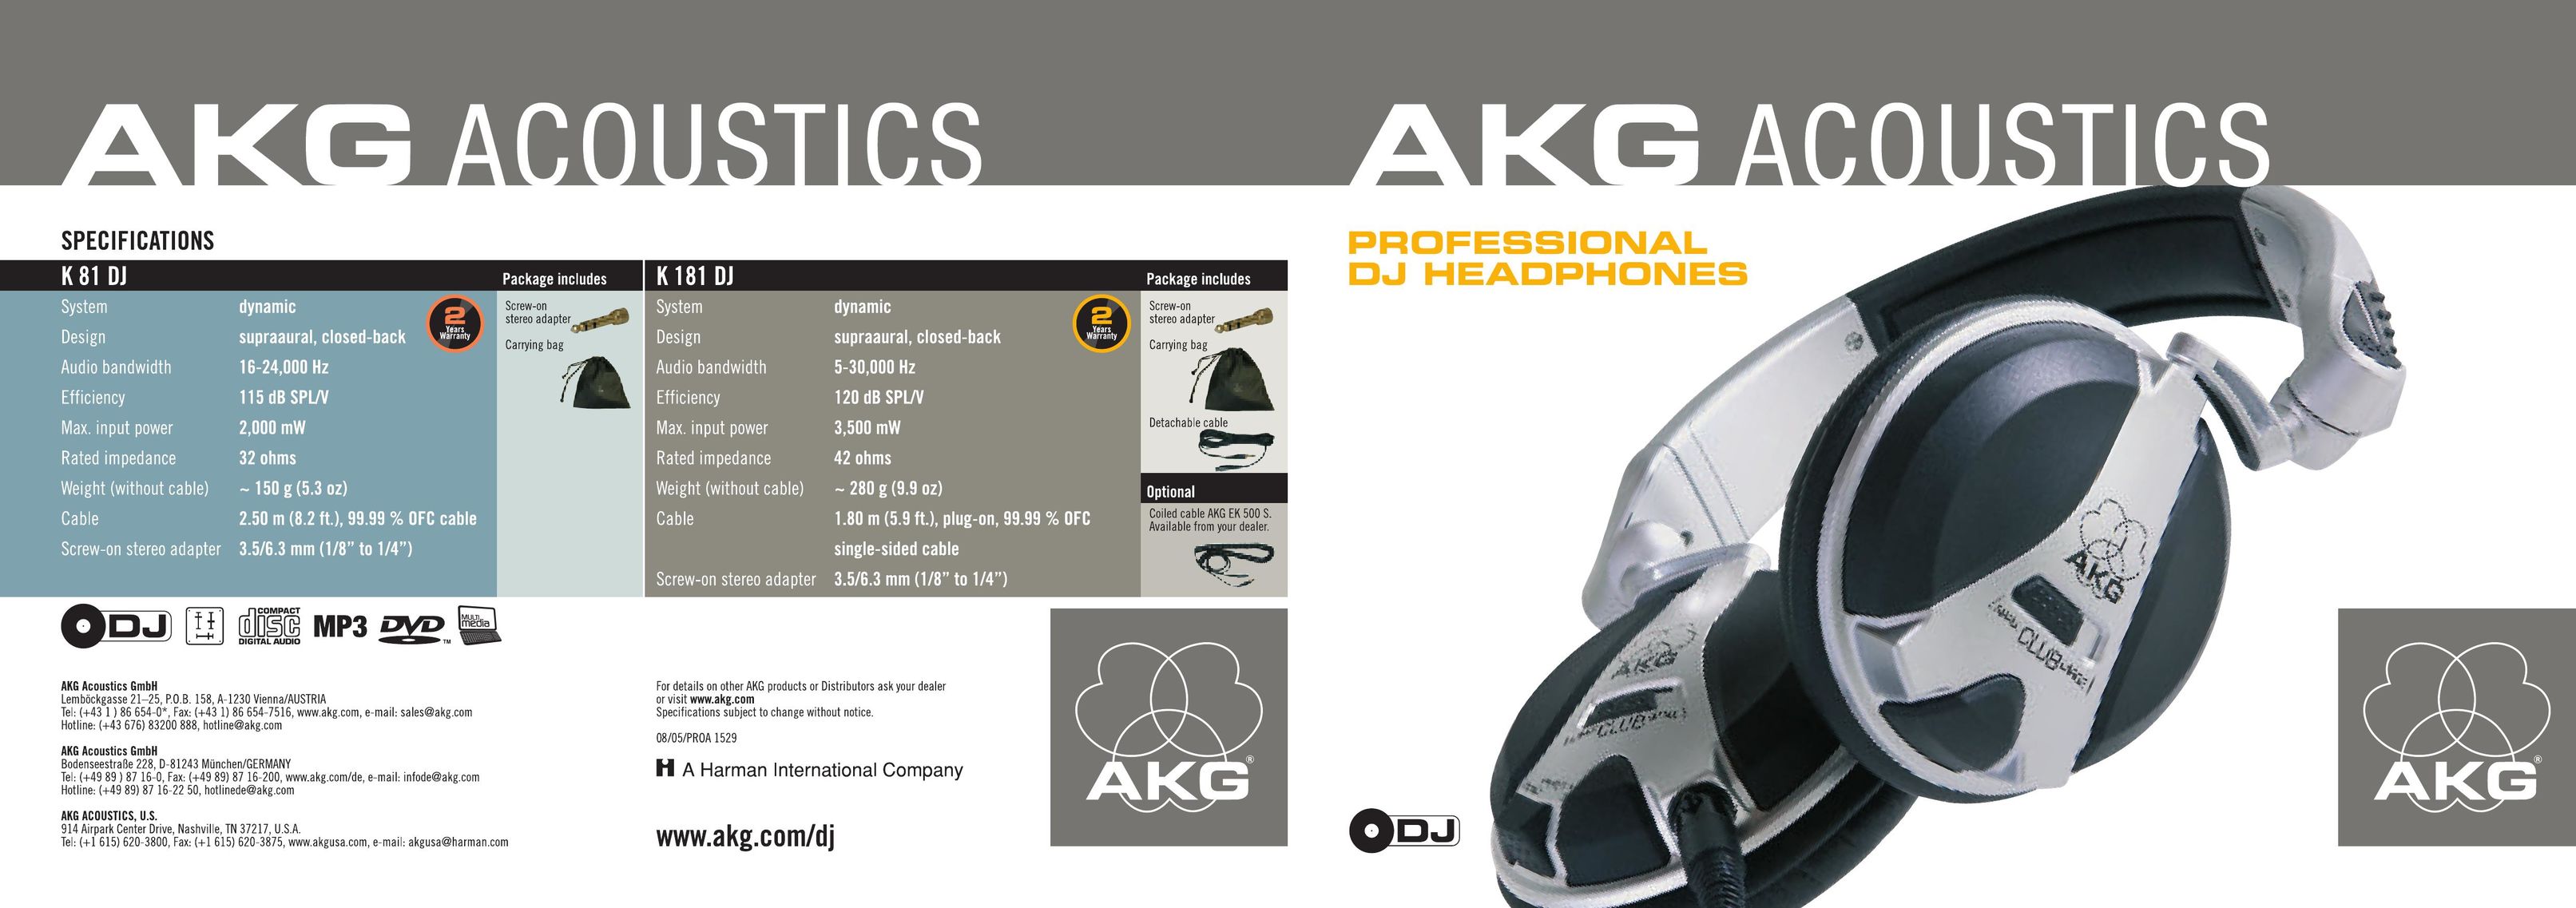 AKG Acoustics K 81 DJ Headphones User Manual